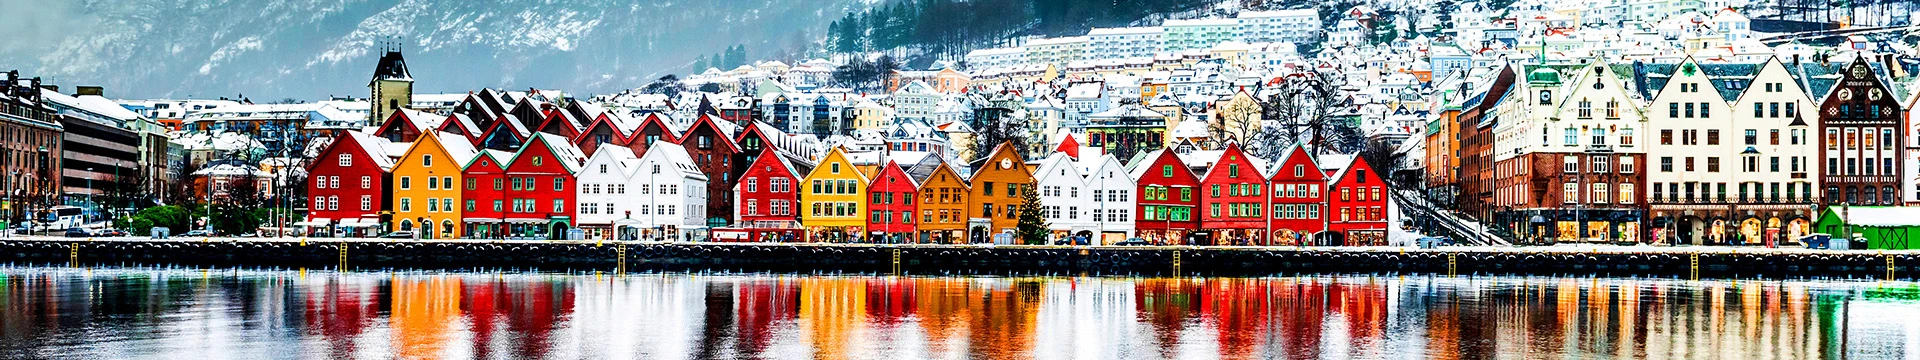 Hotels in Norway